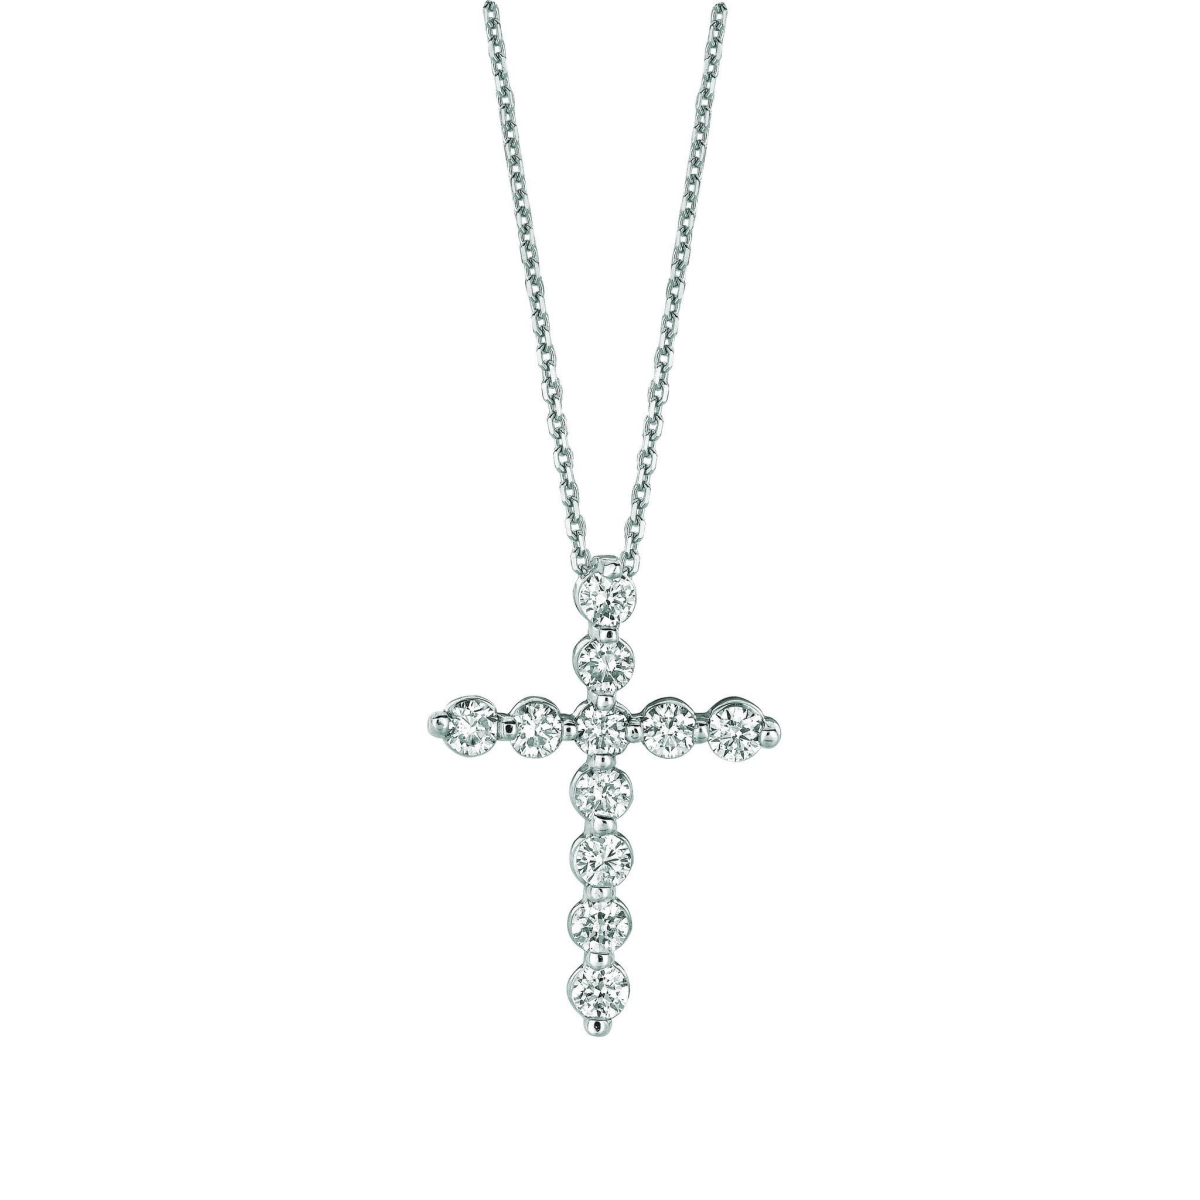 Harry Chad Enterprises 16232 1.01 CT Diamond Cross Pendant Necklace - 14K White